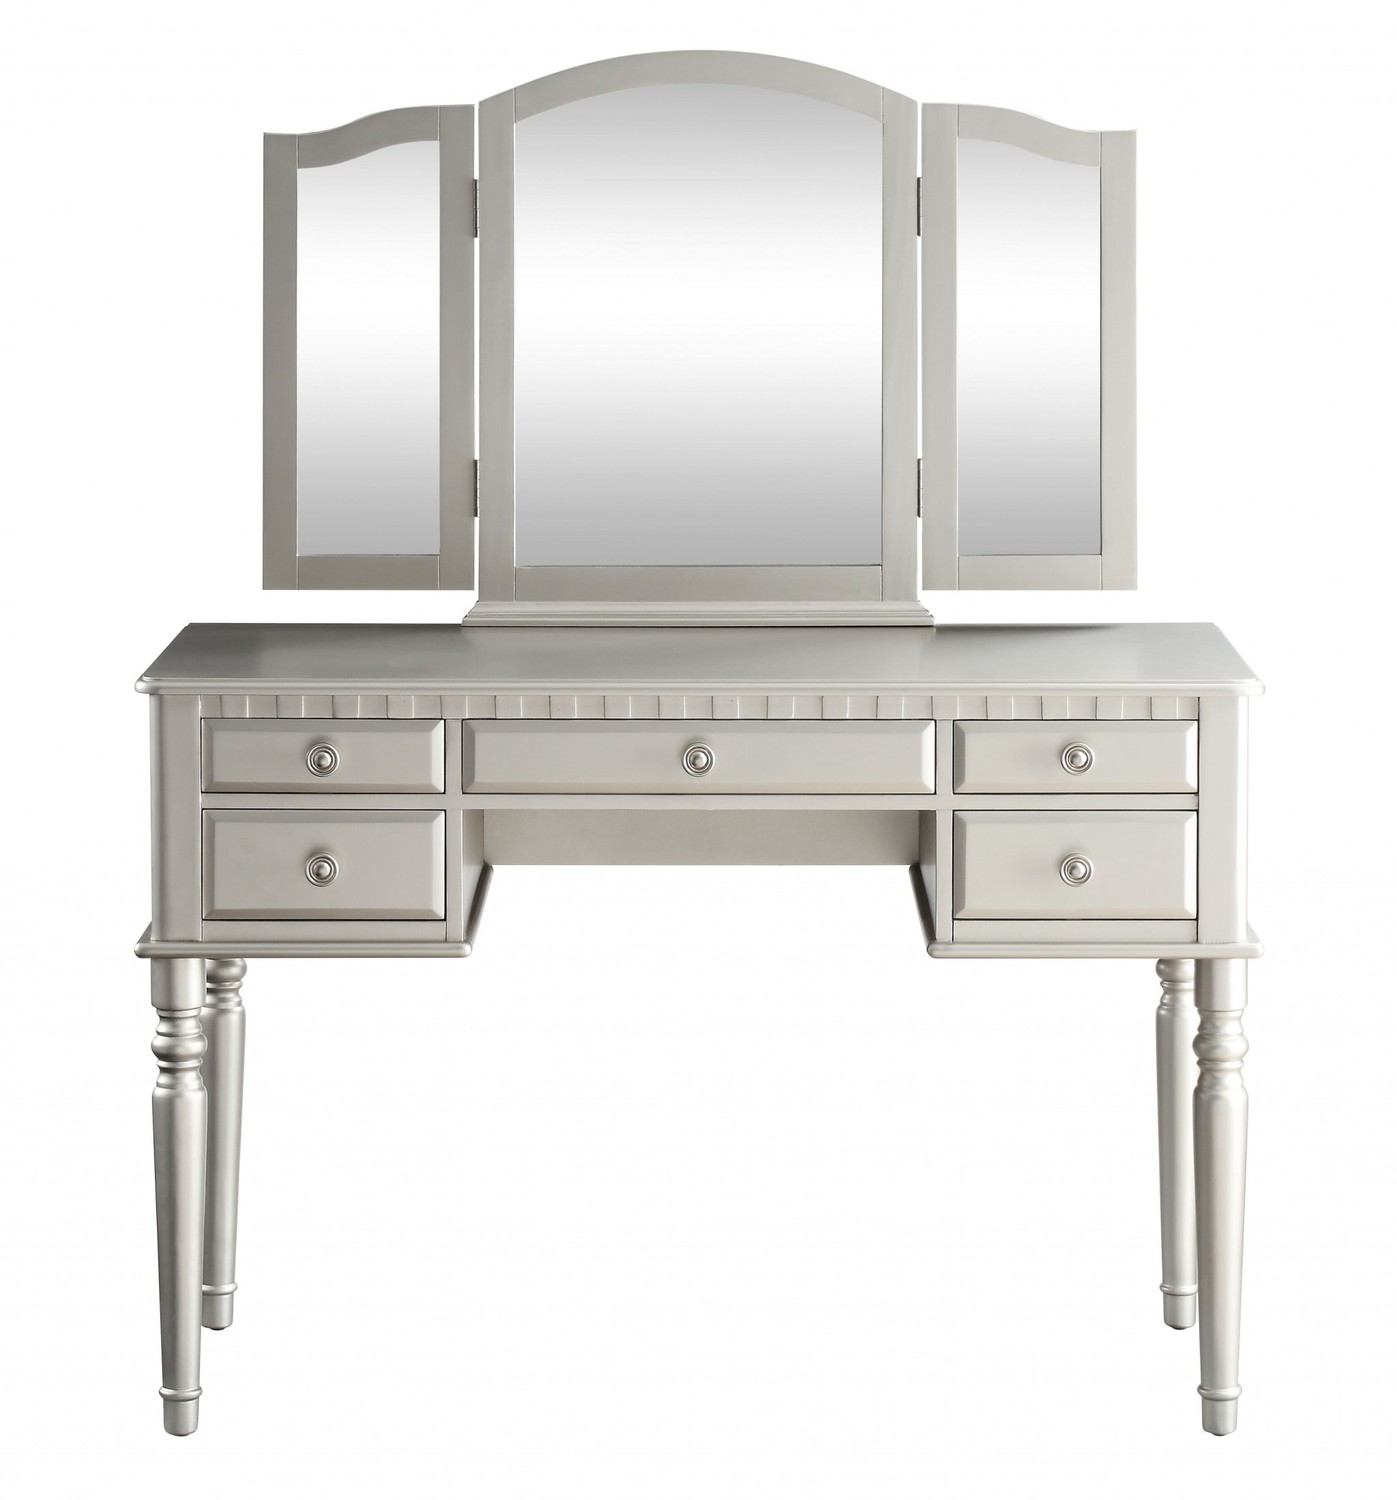 19" X 43" X 54" PU Silver Wood Mirror Upholstered (Seat) Vanity Set